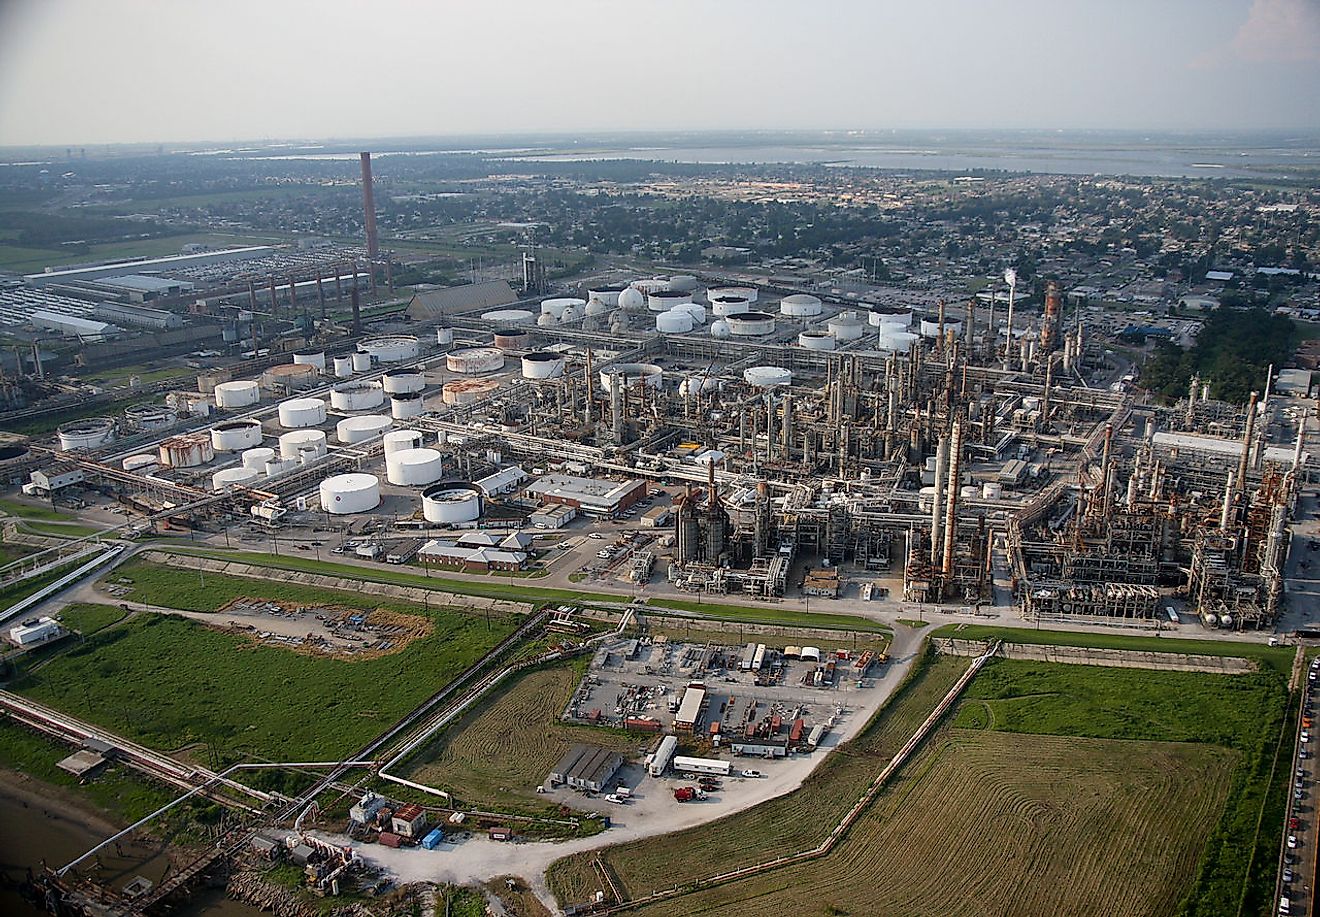 Aerial view of a Louisiana oil refinery. Image credit: Jacinta Quesada/Wikimedia.org